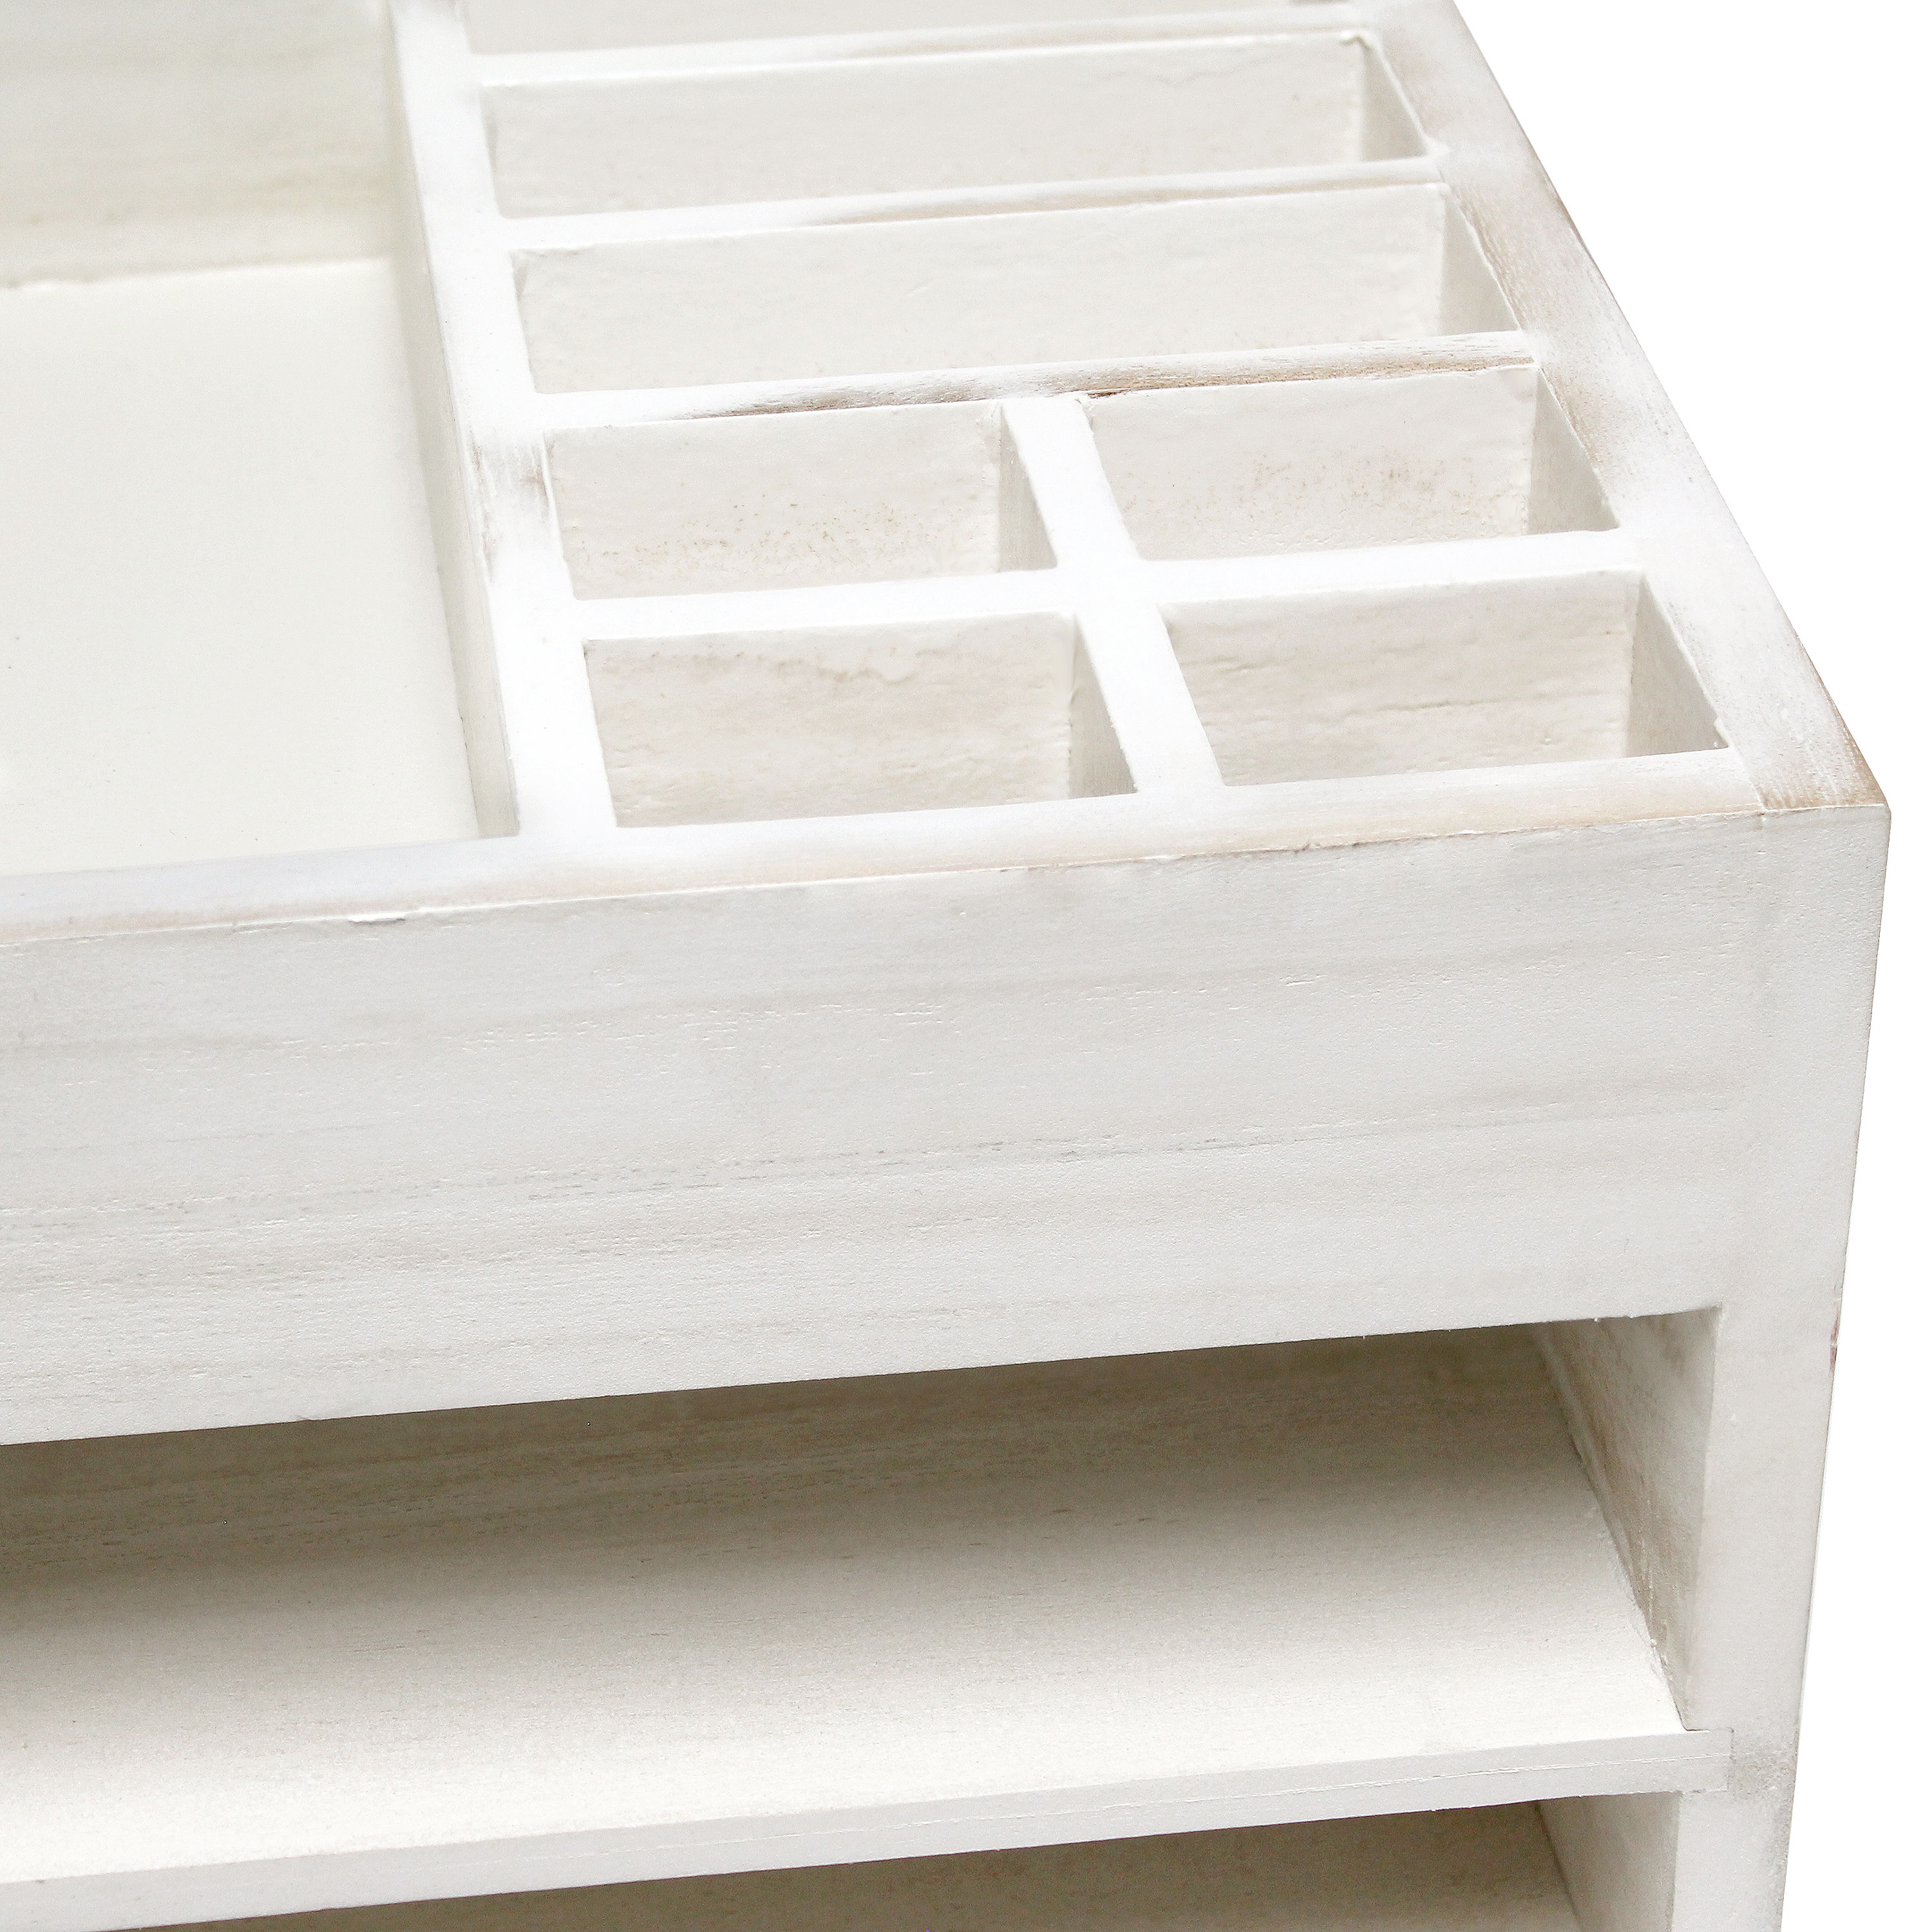 Elegant Designs Wood 14 Compartment Desktop Organizer Set, Pack of